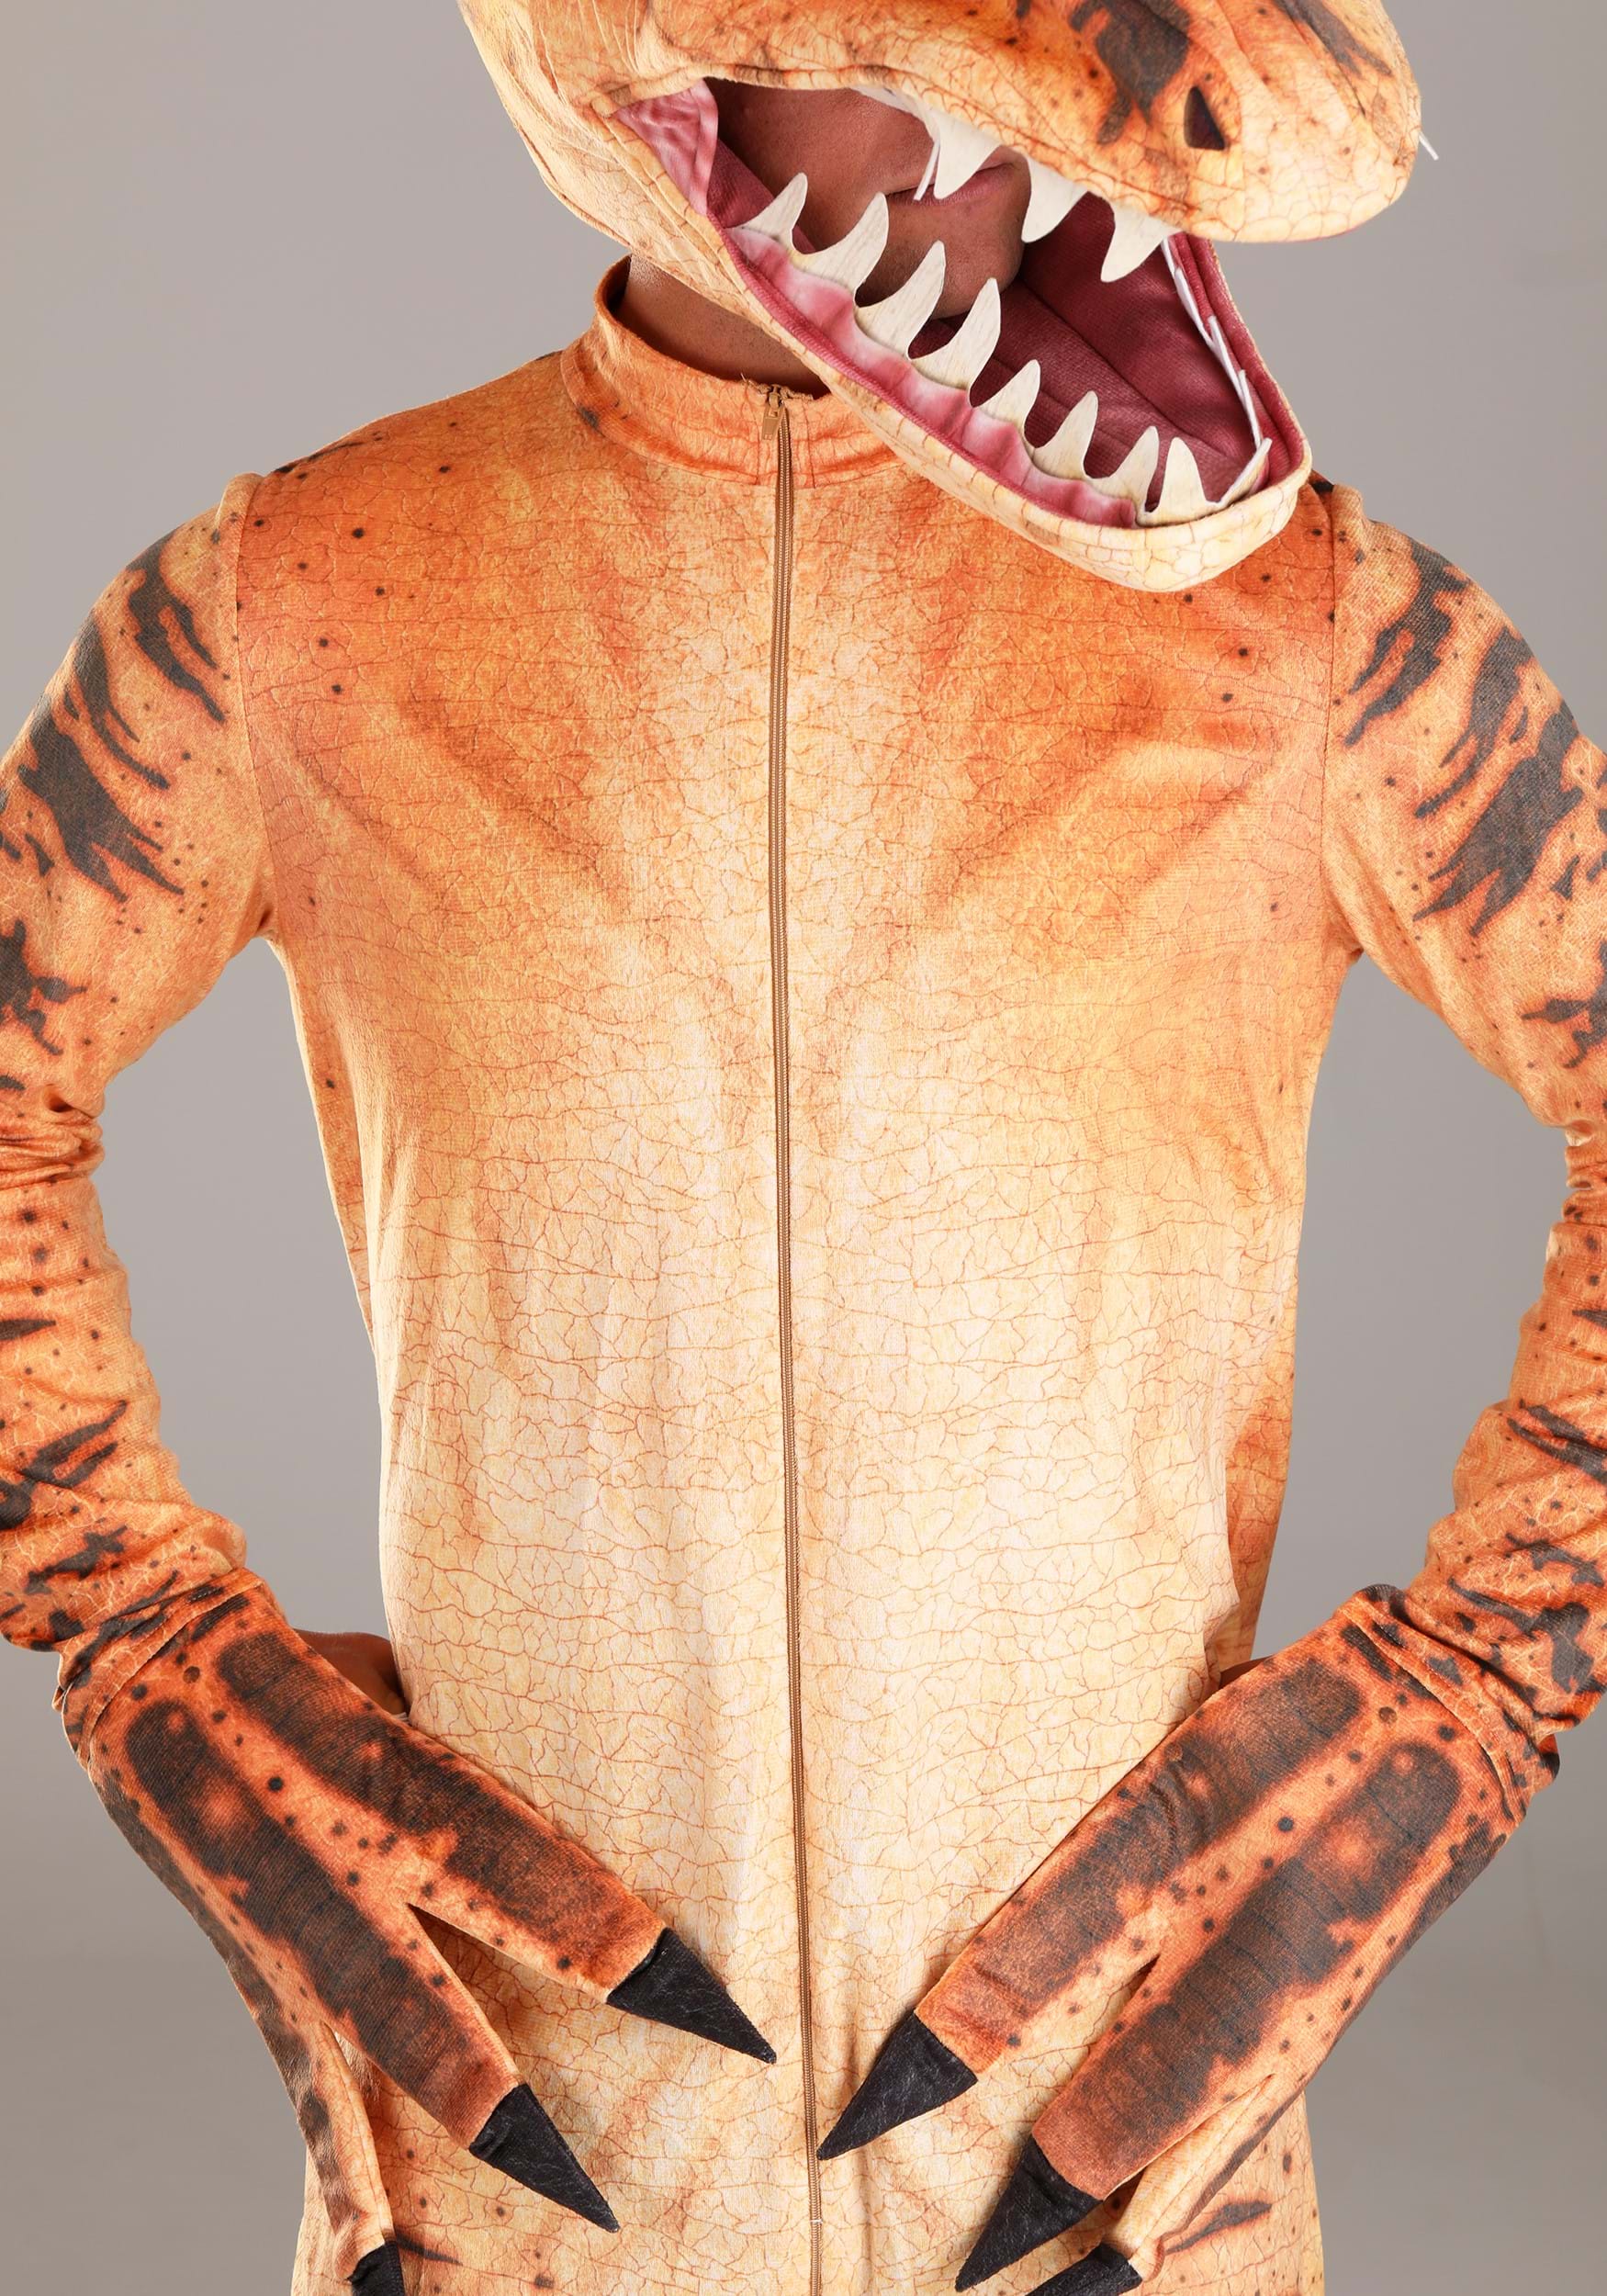 Velociraptor Costume For Adult's